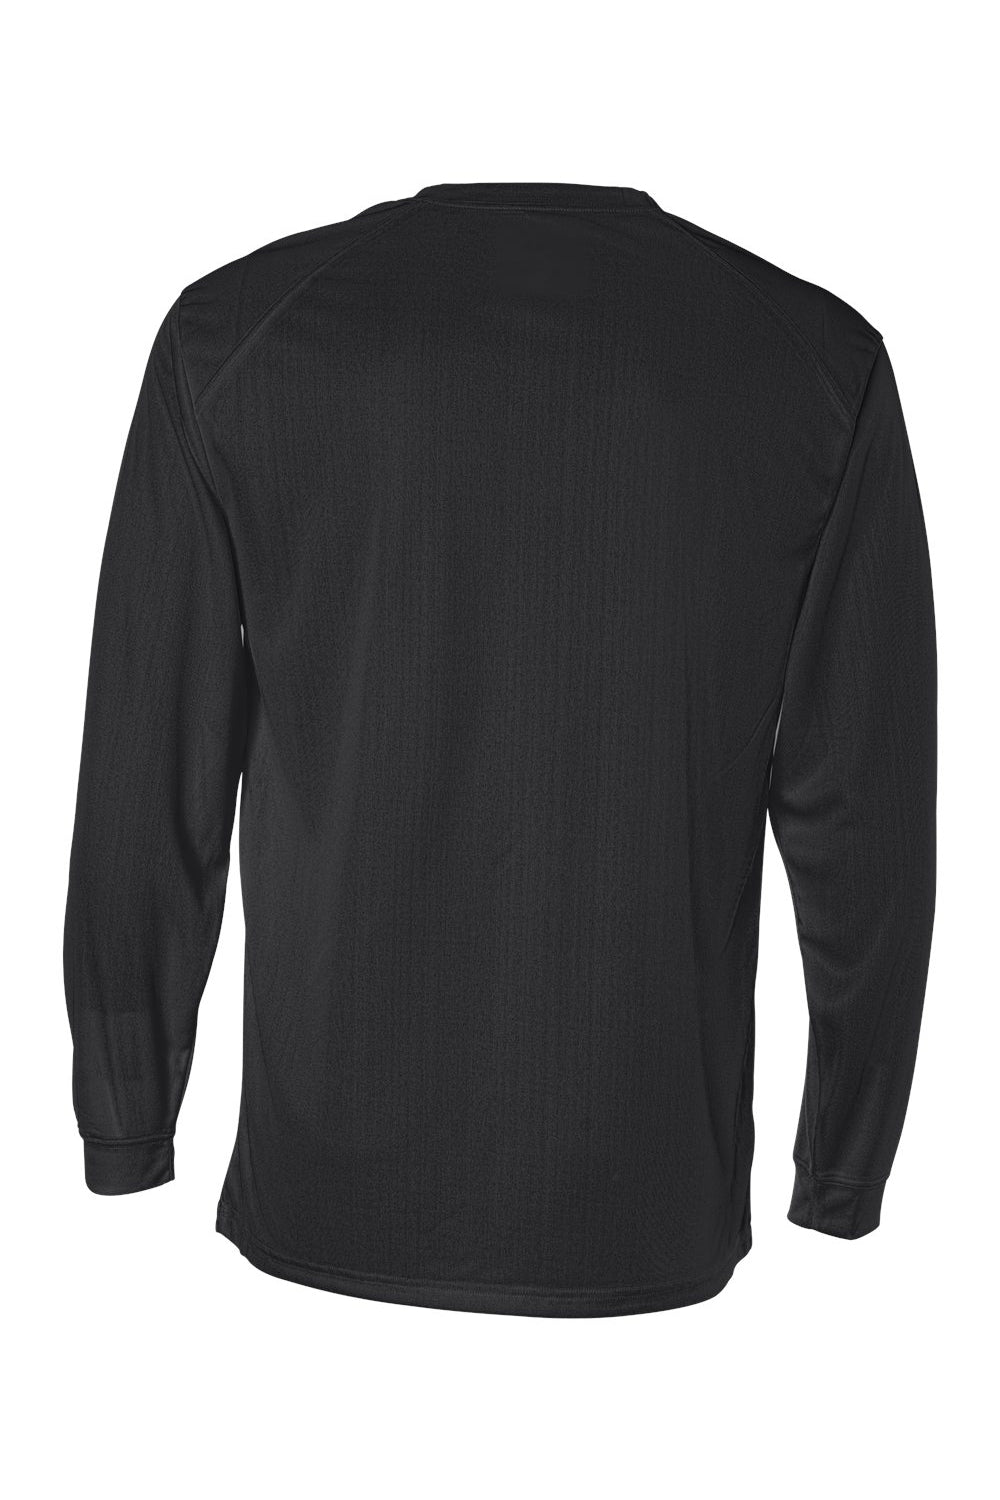 Badger 4104 Mens B-Core Moisture Wicking Long Sleeve Crewneck T-Shirt Black Flat Back